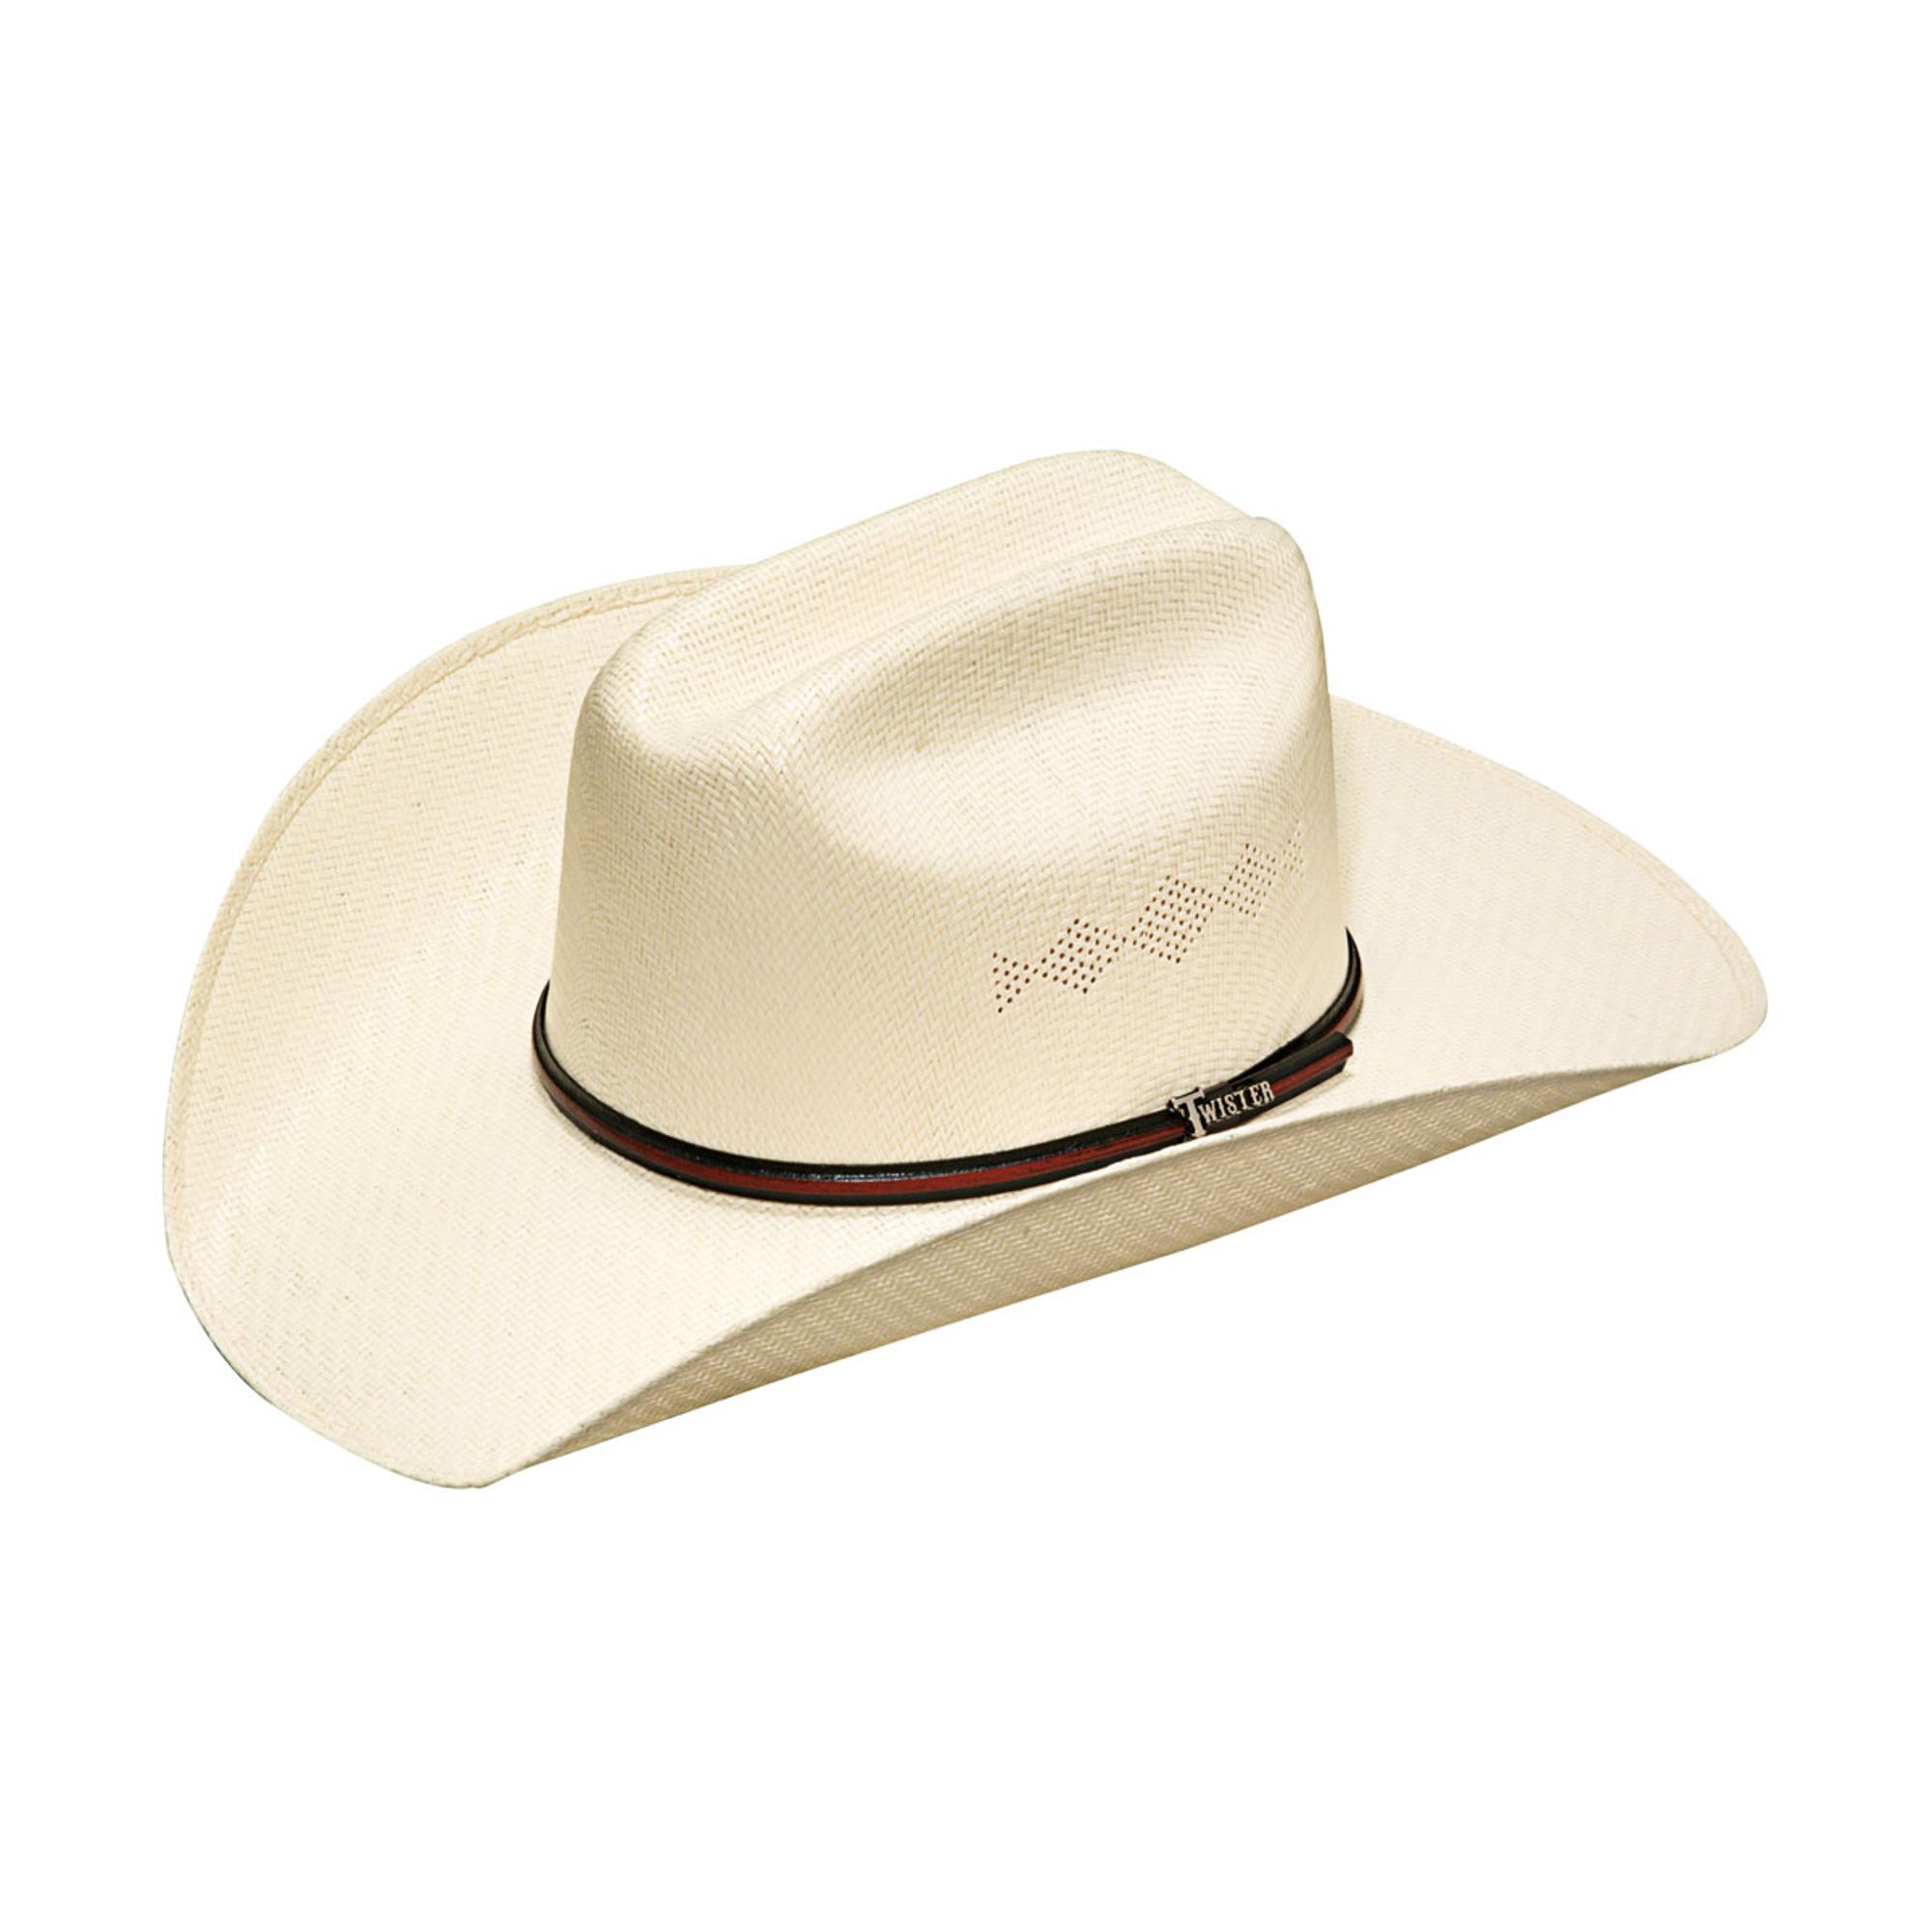 5X Twister Shantung Straw Cowboy Hat with Eyelets